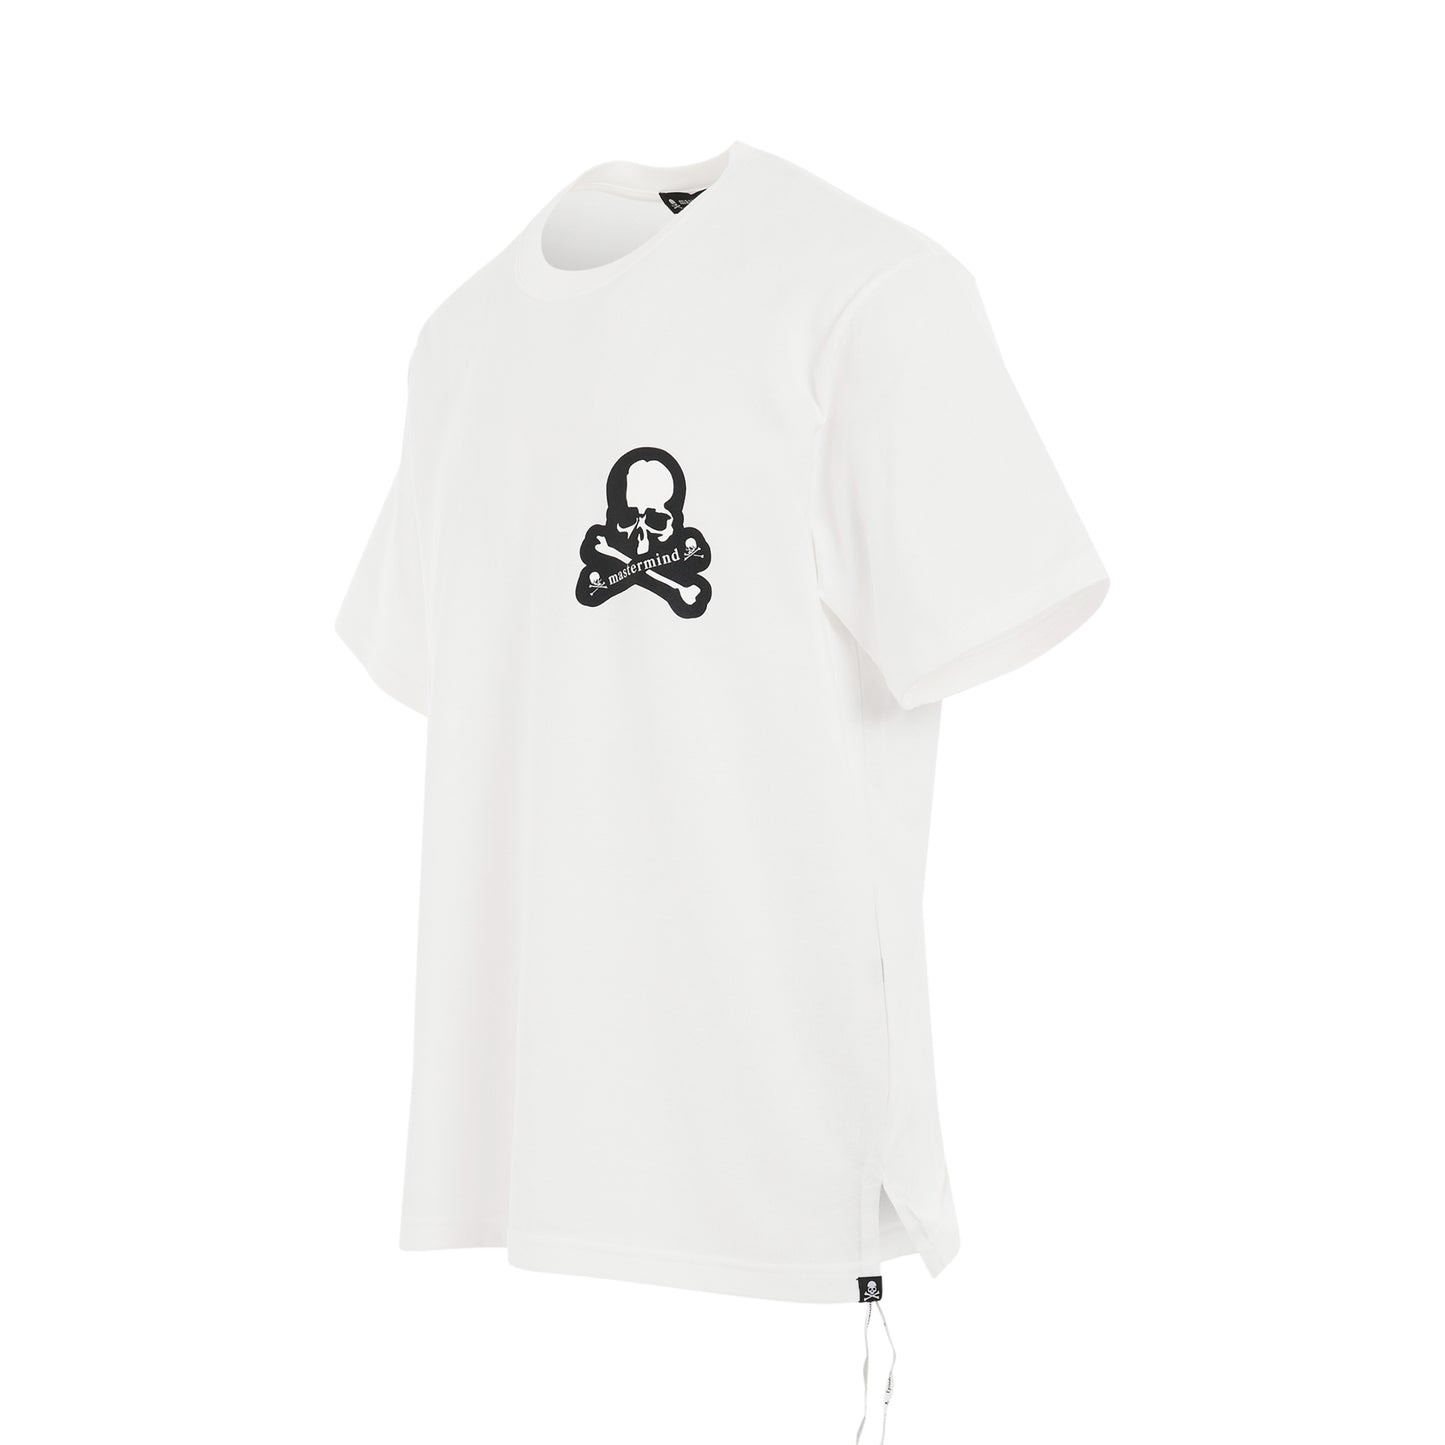 Glow in the Dark Skull T-Shirt in White